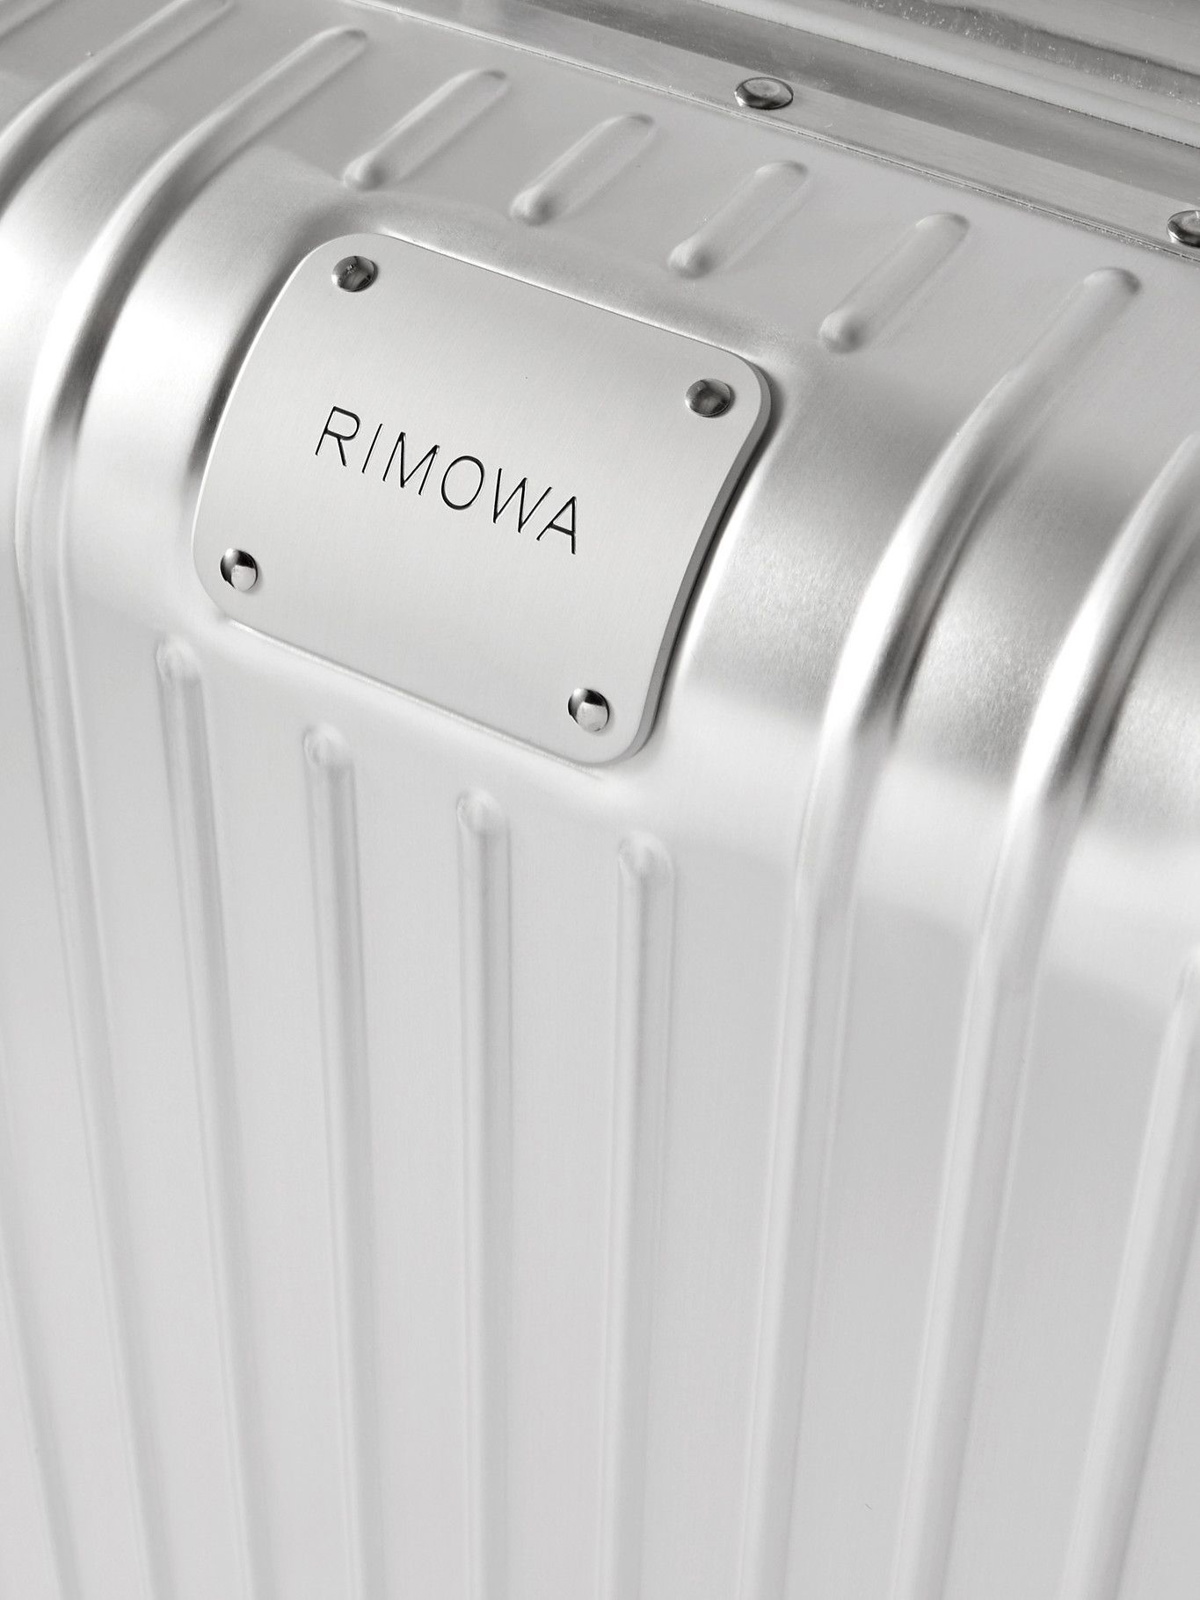 RIMOWA Original Cabin Aluminium Carry-on Suitcase - Silver